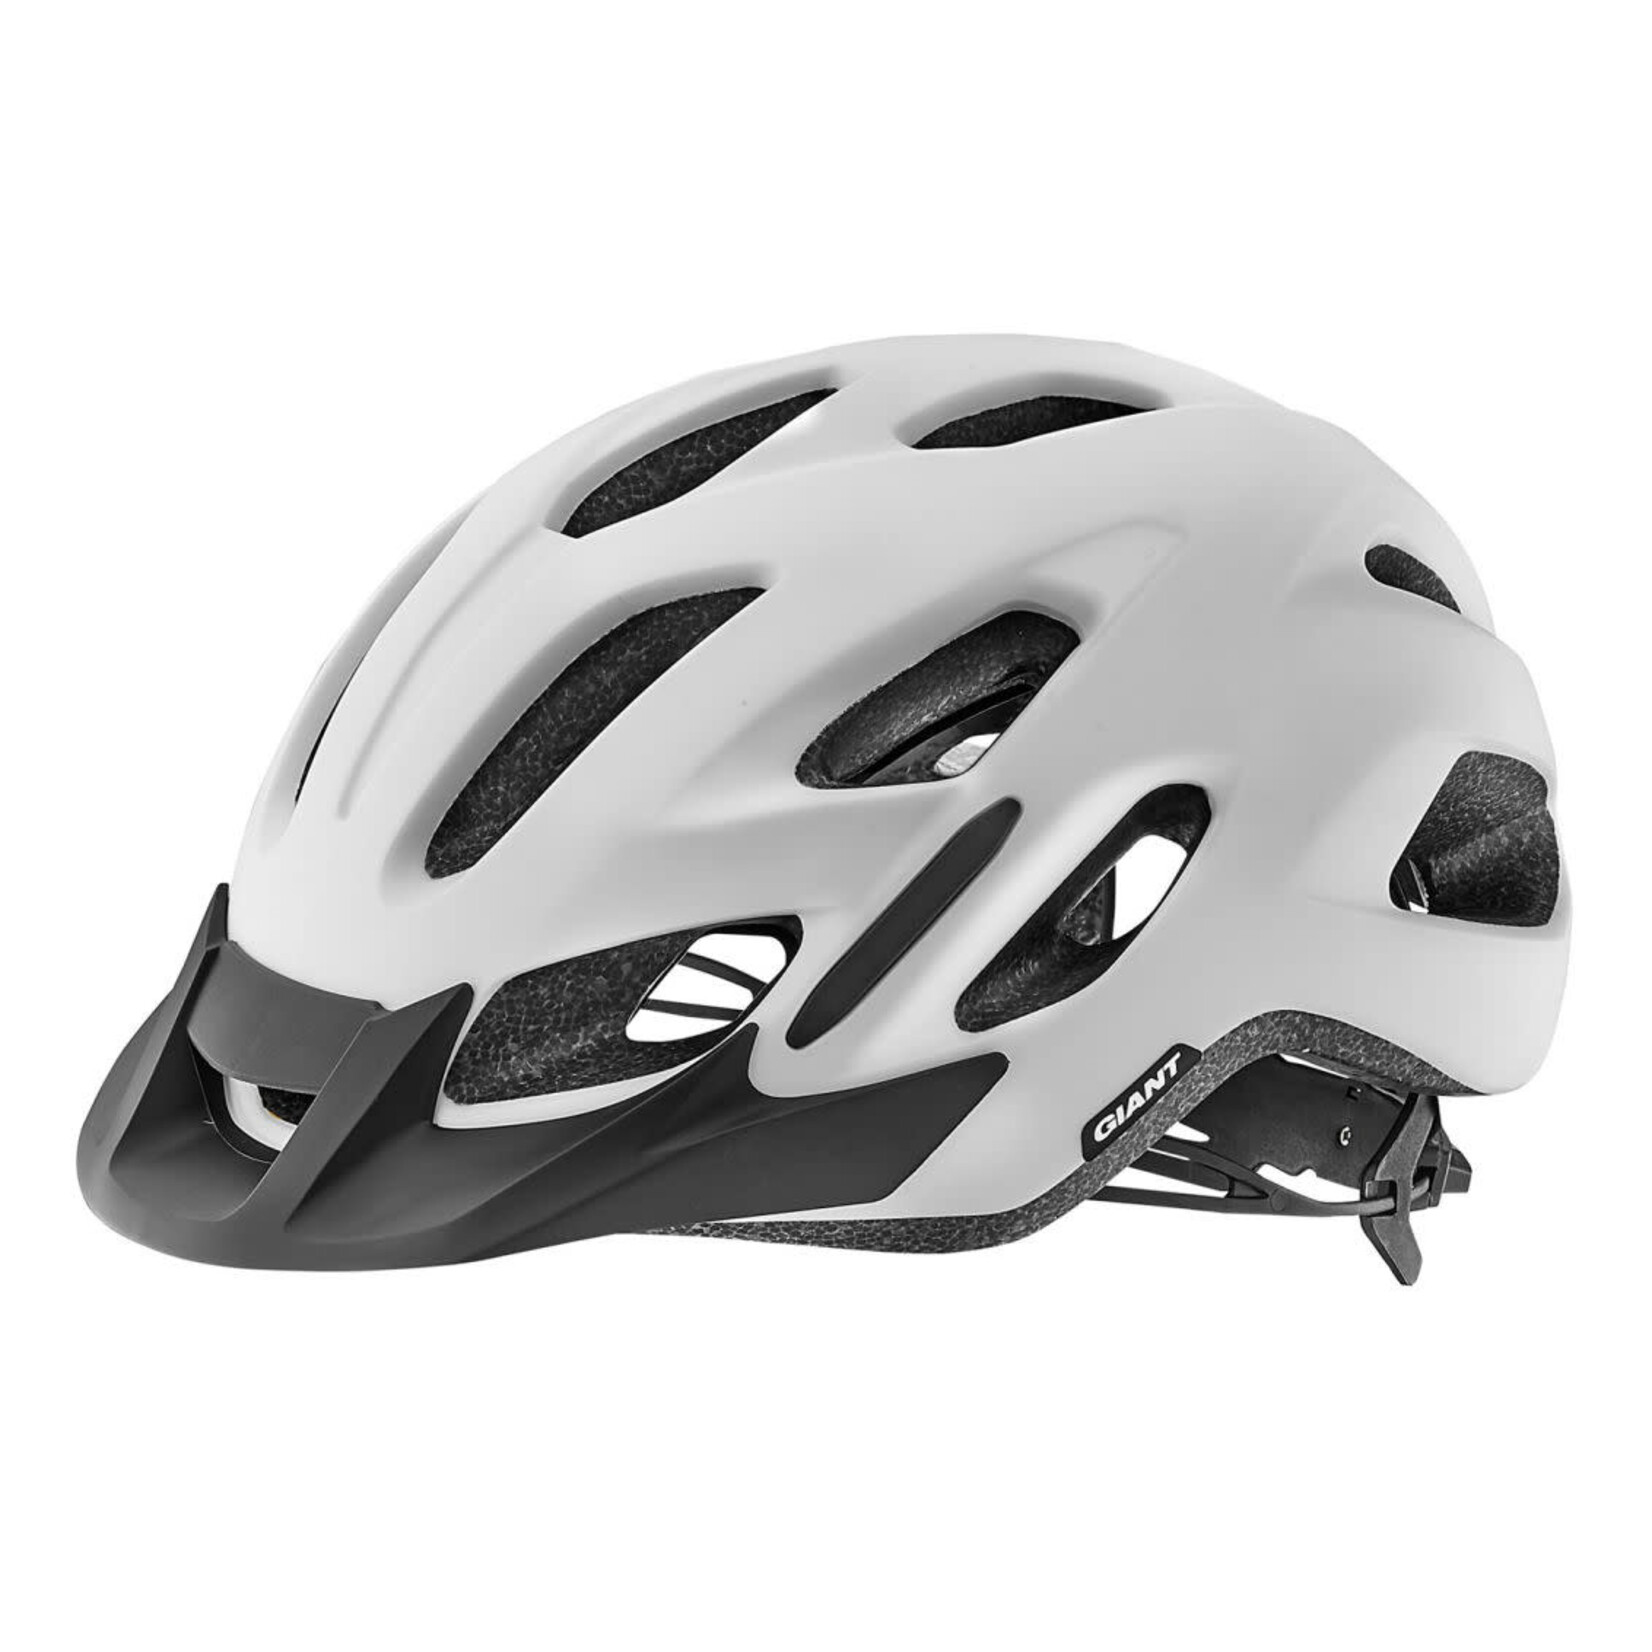 GIANT Compel Helmet Matte White - XL 55-63cm